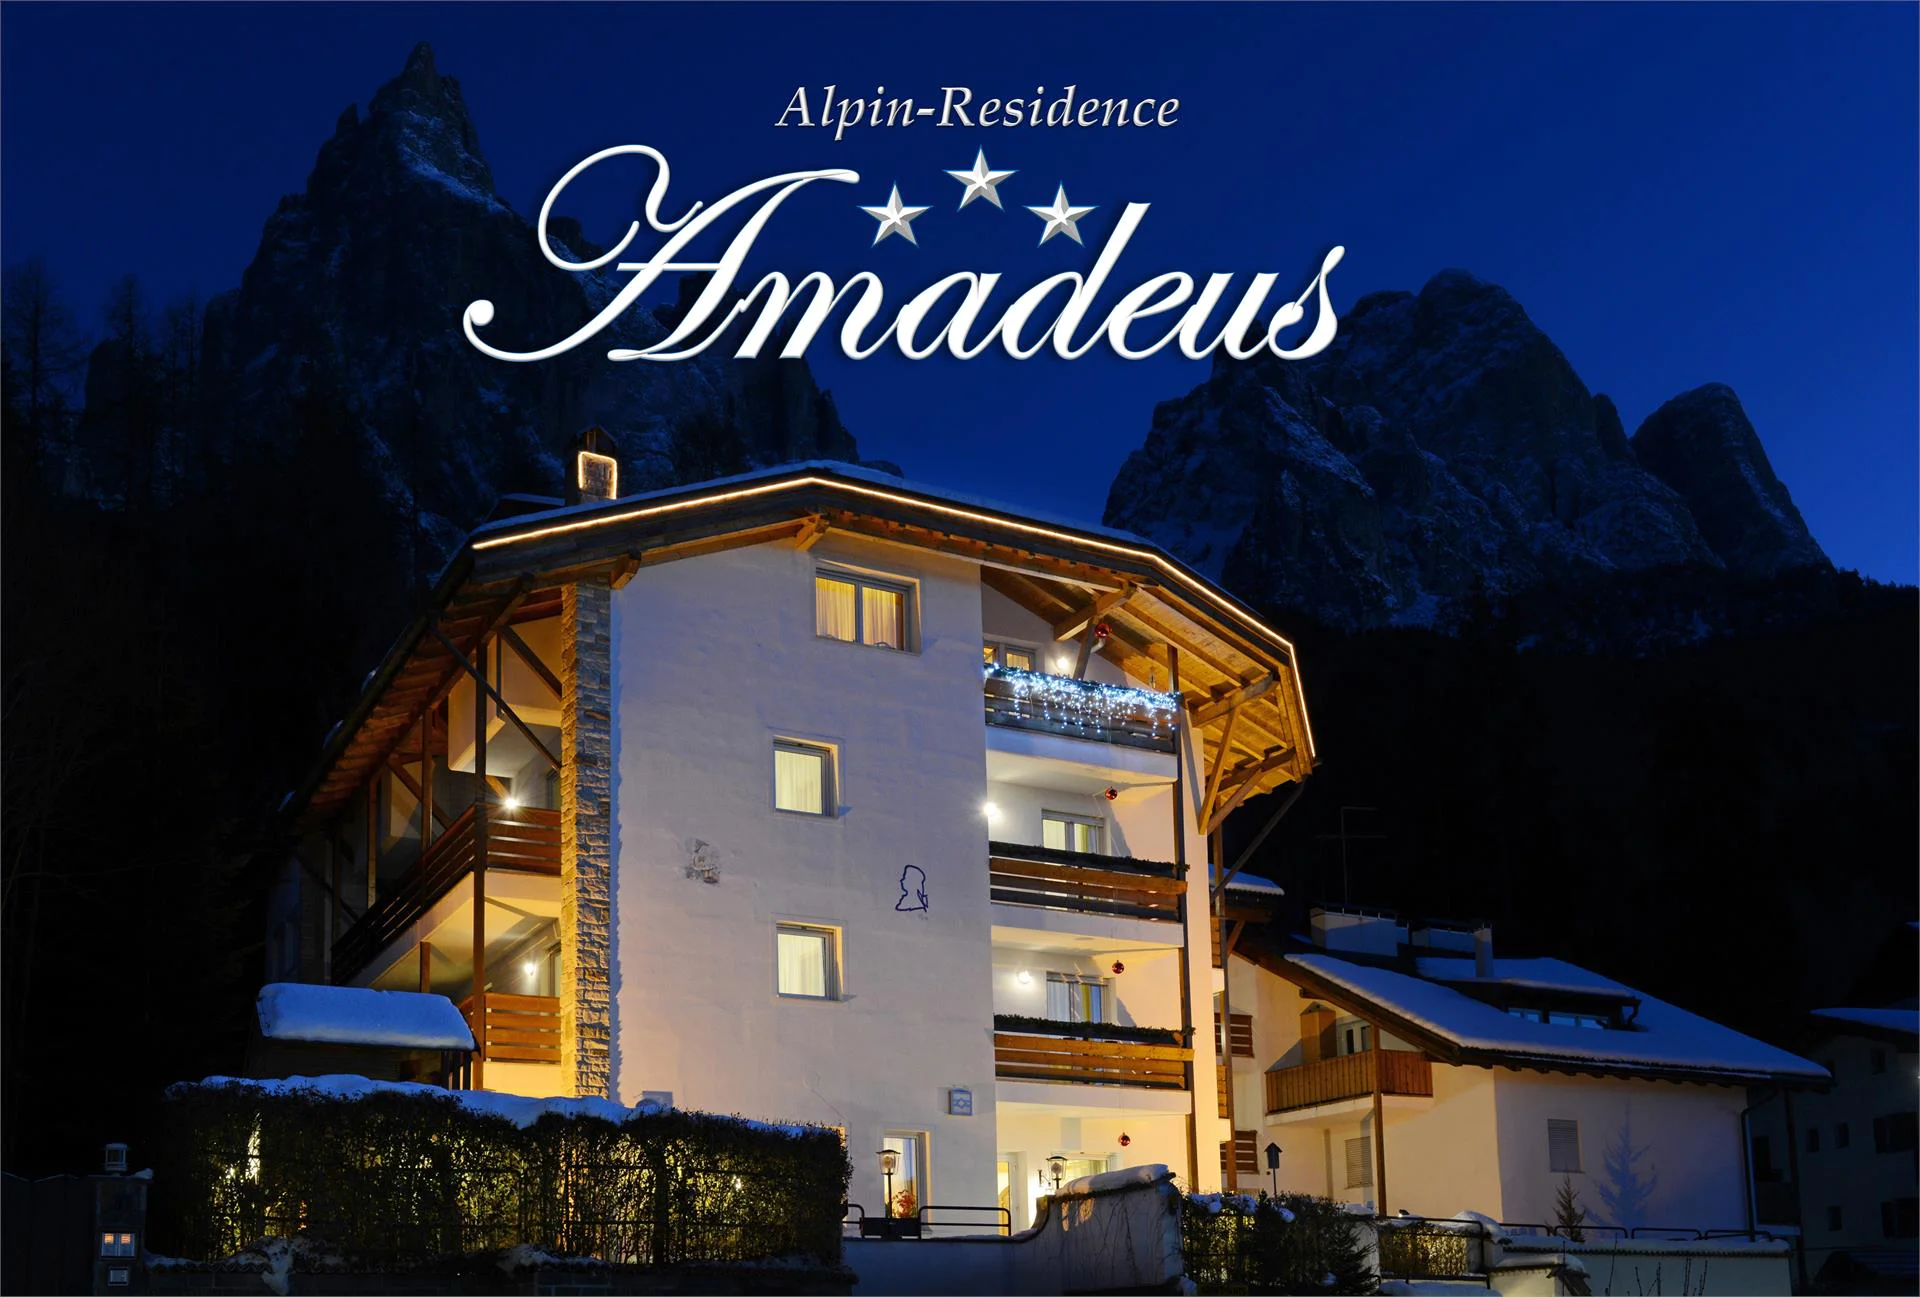 Alpin-Residence Amadeus Castelrotto 2 suedtirol.info